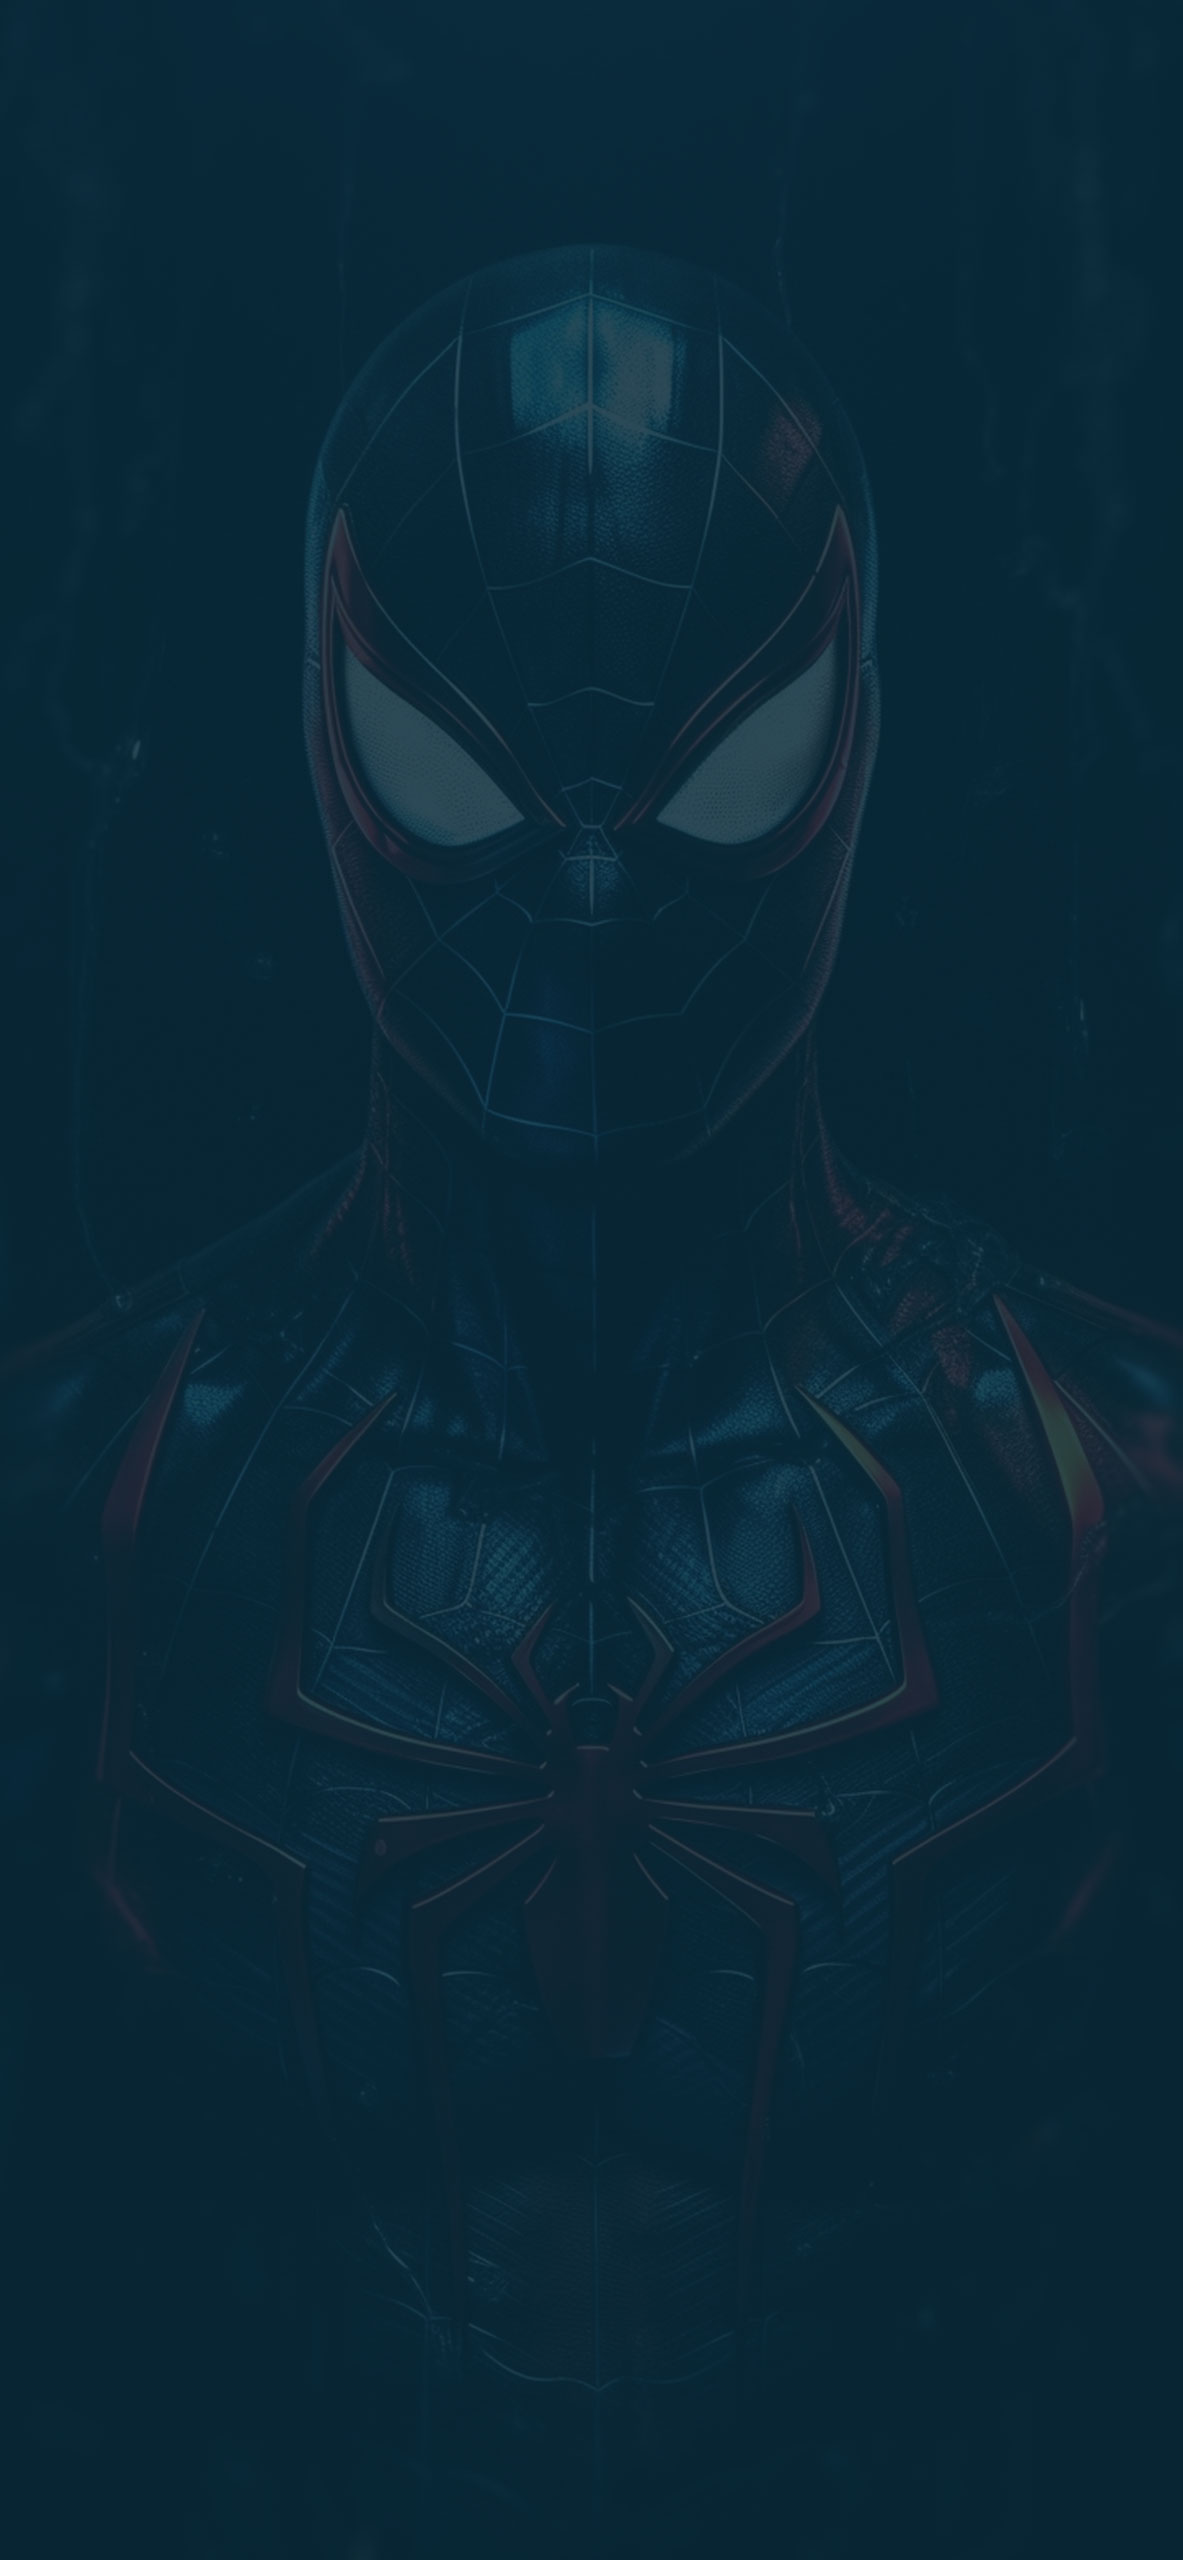 Spiderman deep dark wallpaper Marvel cool wallpaper for iPhone